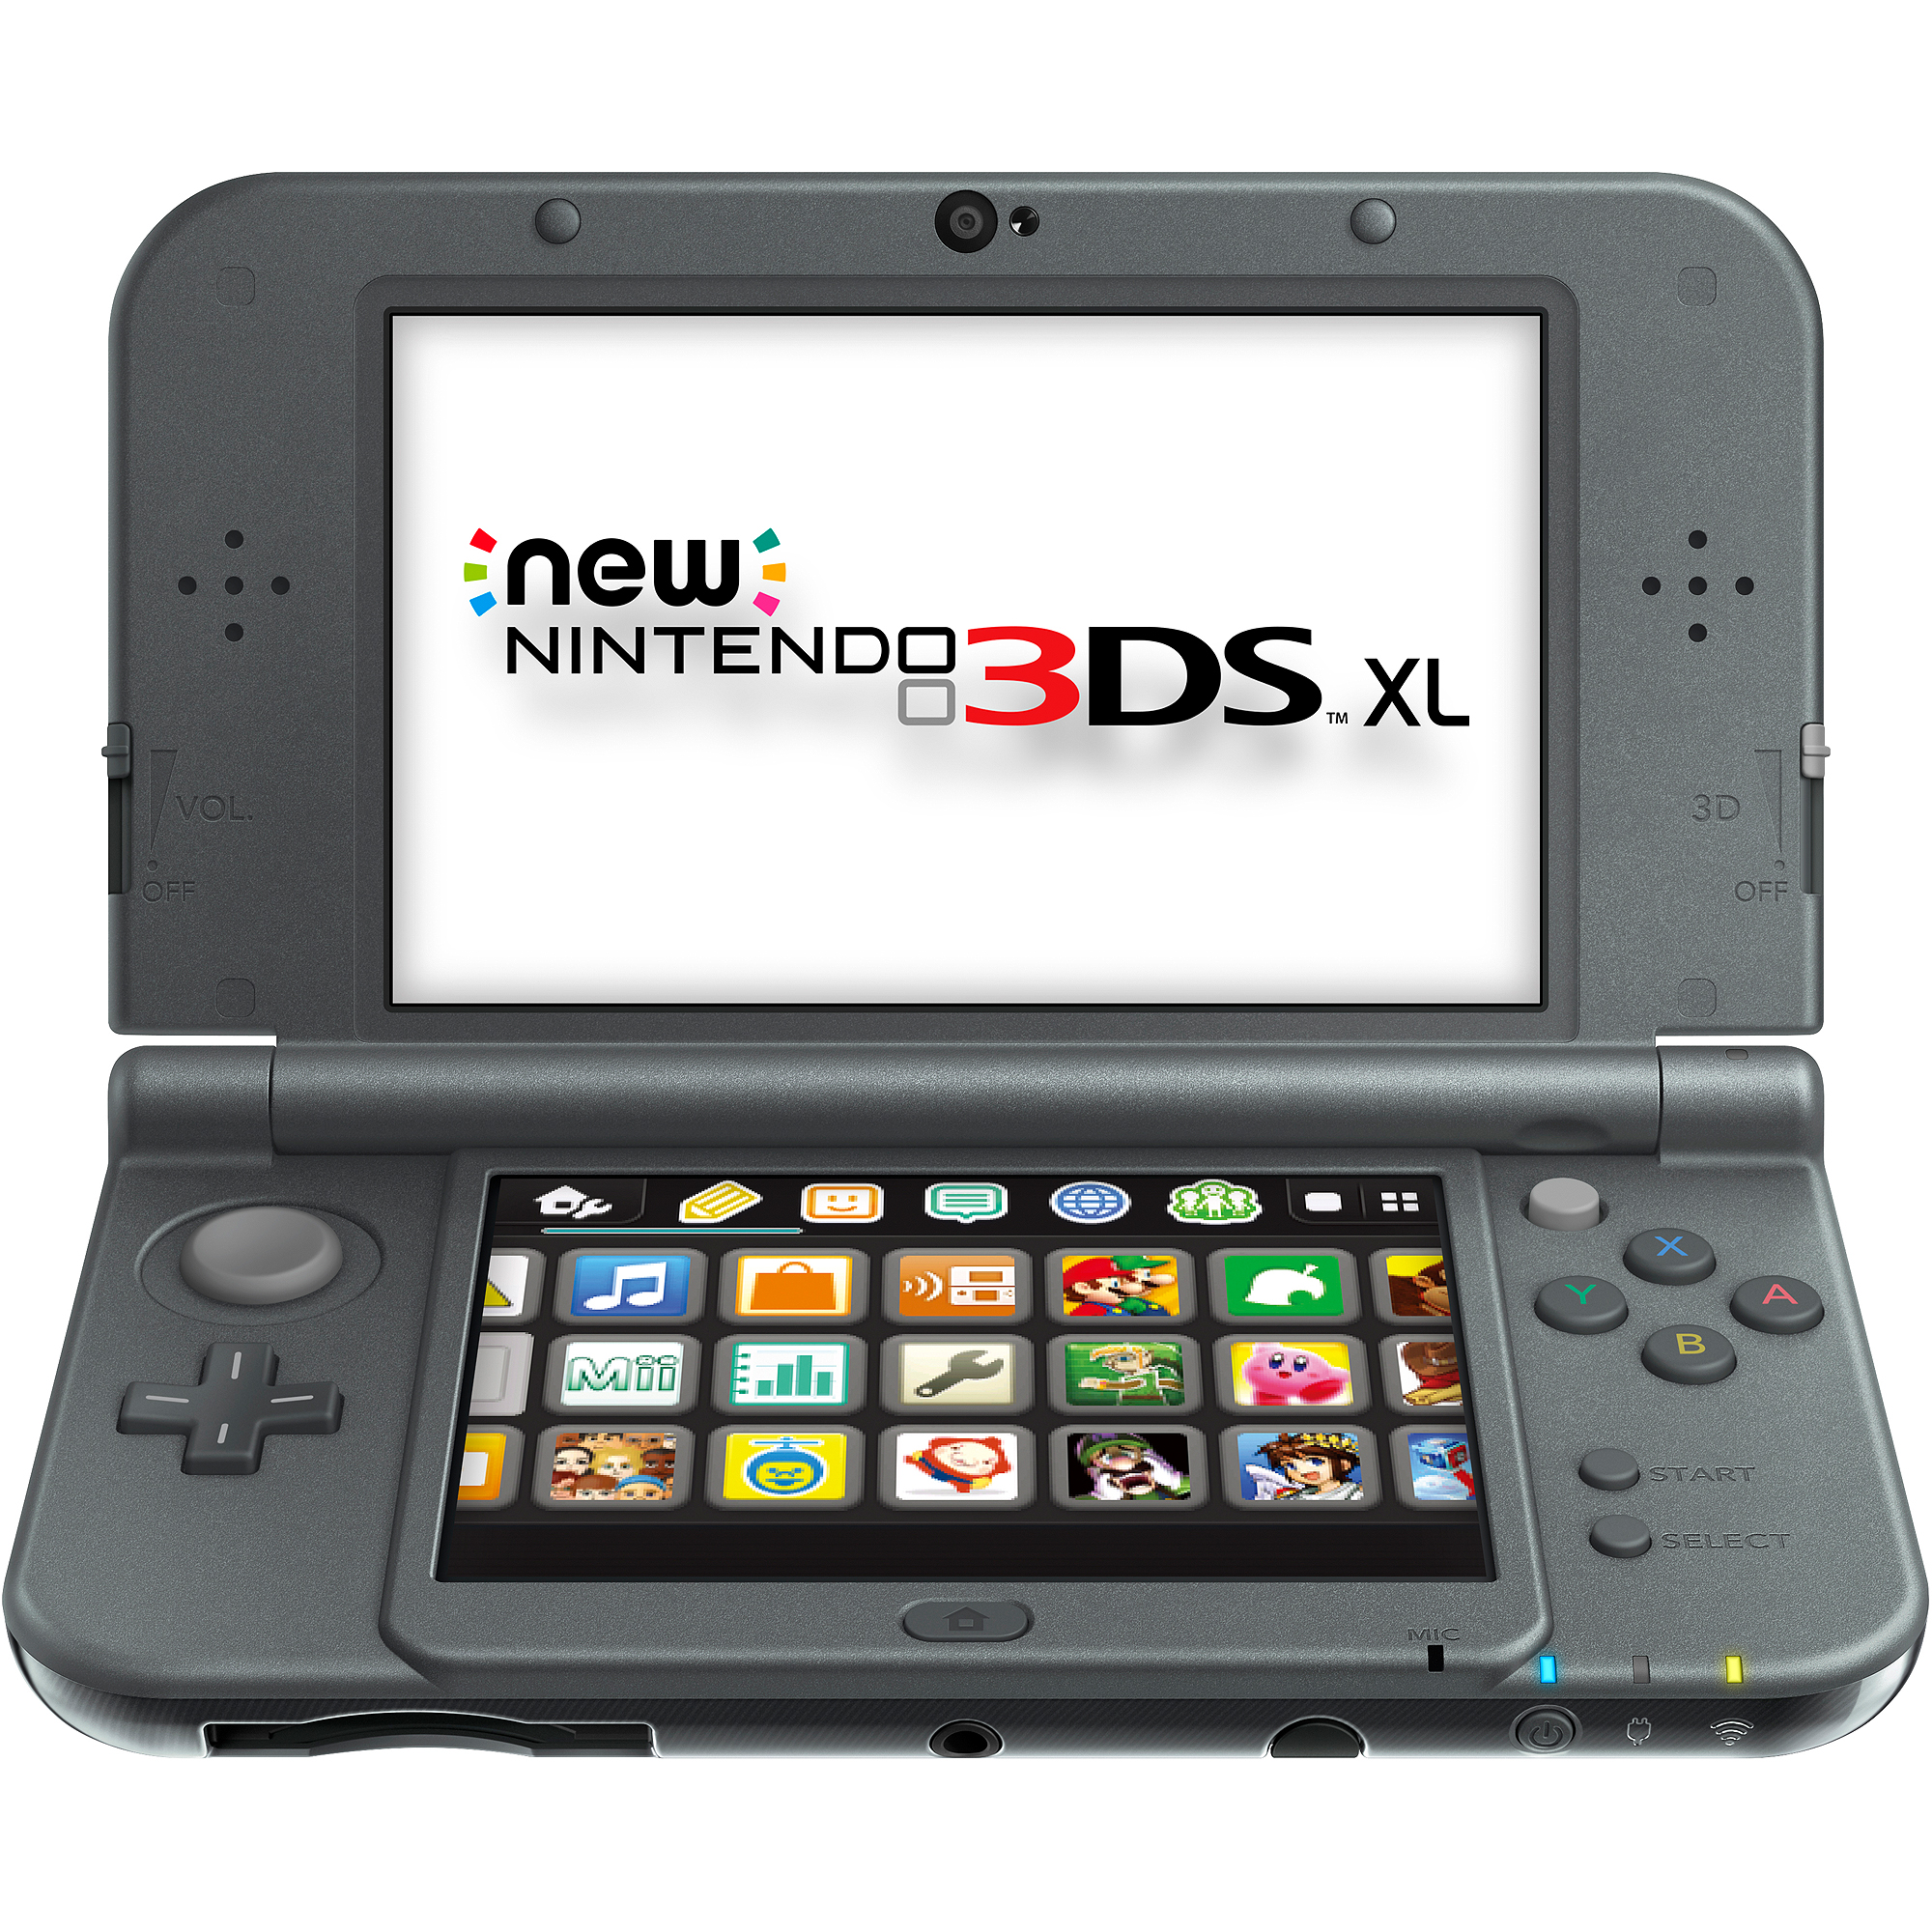 Nintendo New 3DS XL - Black - image 1 of 12